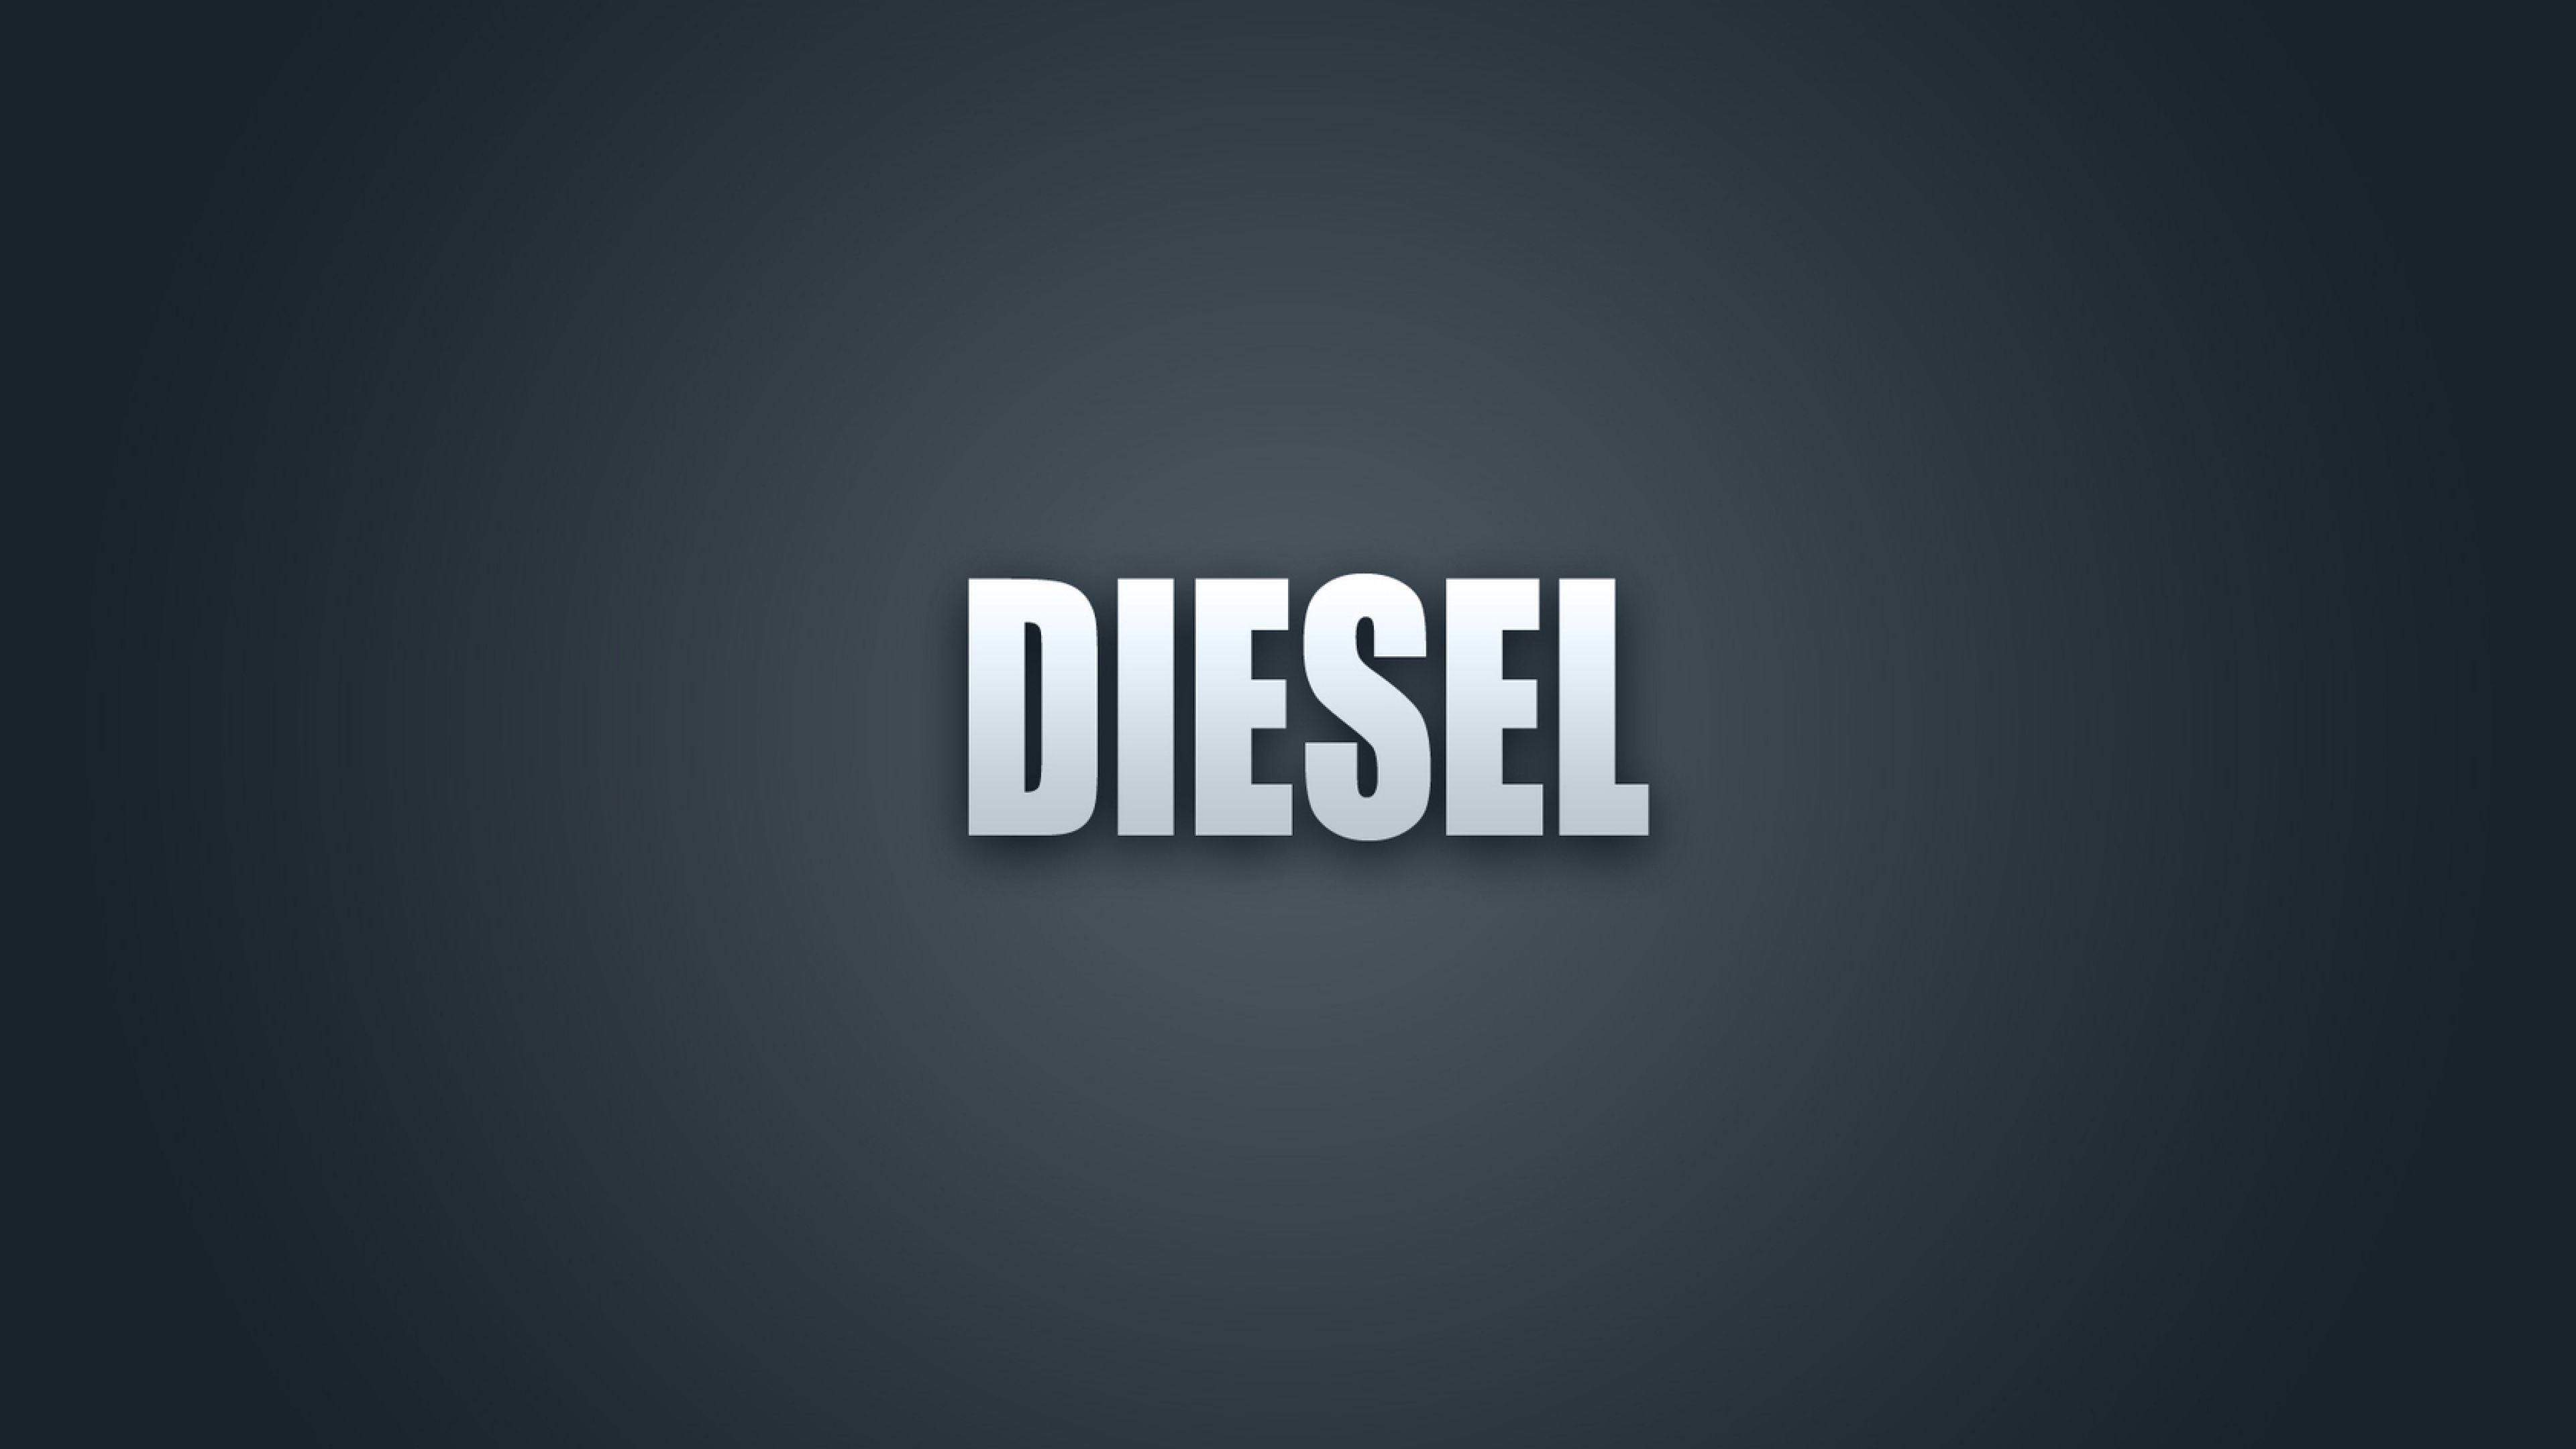 Логотип дизель